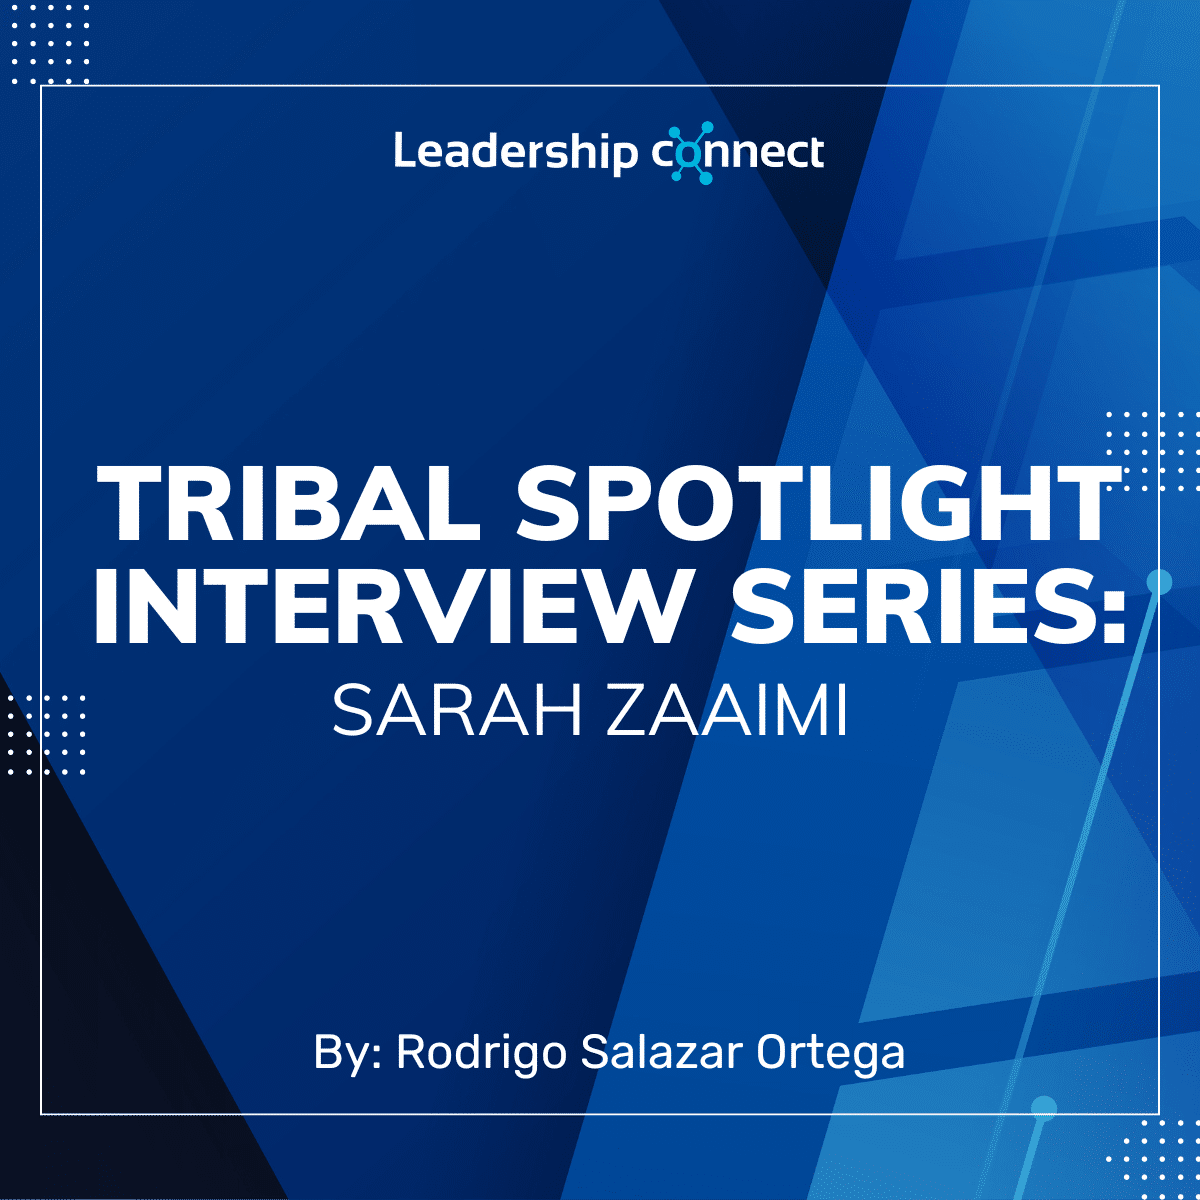 Tribal Spotlight Interview Series with Sarah Zaaimi